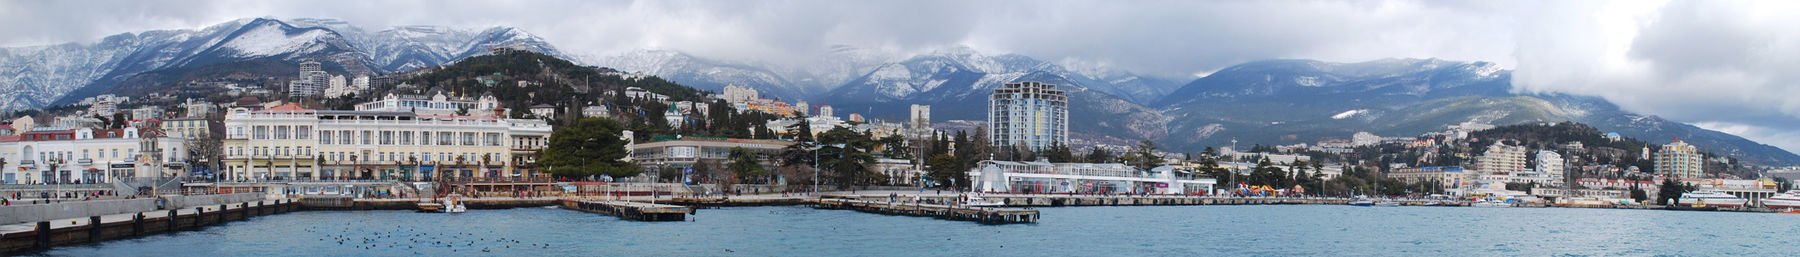 Yalta banner.jpg